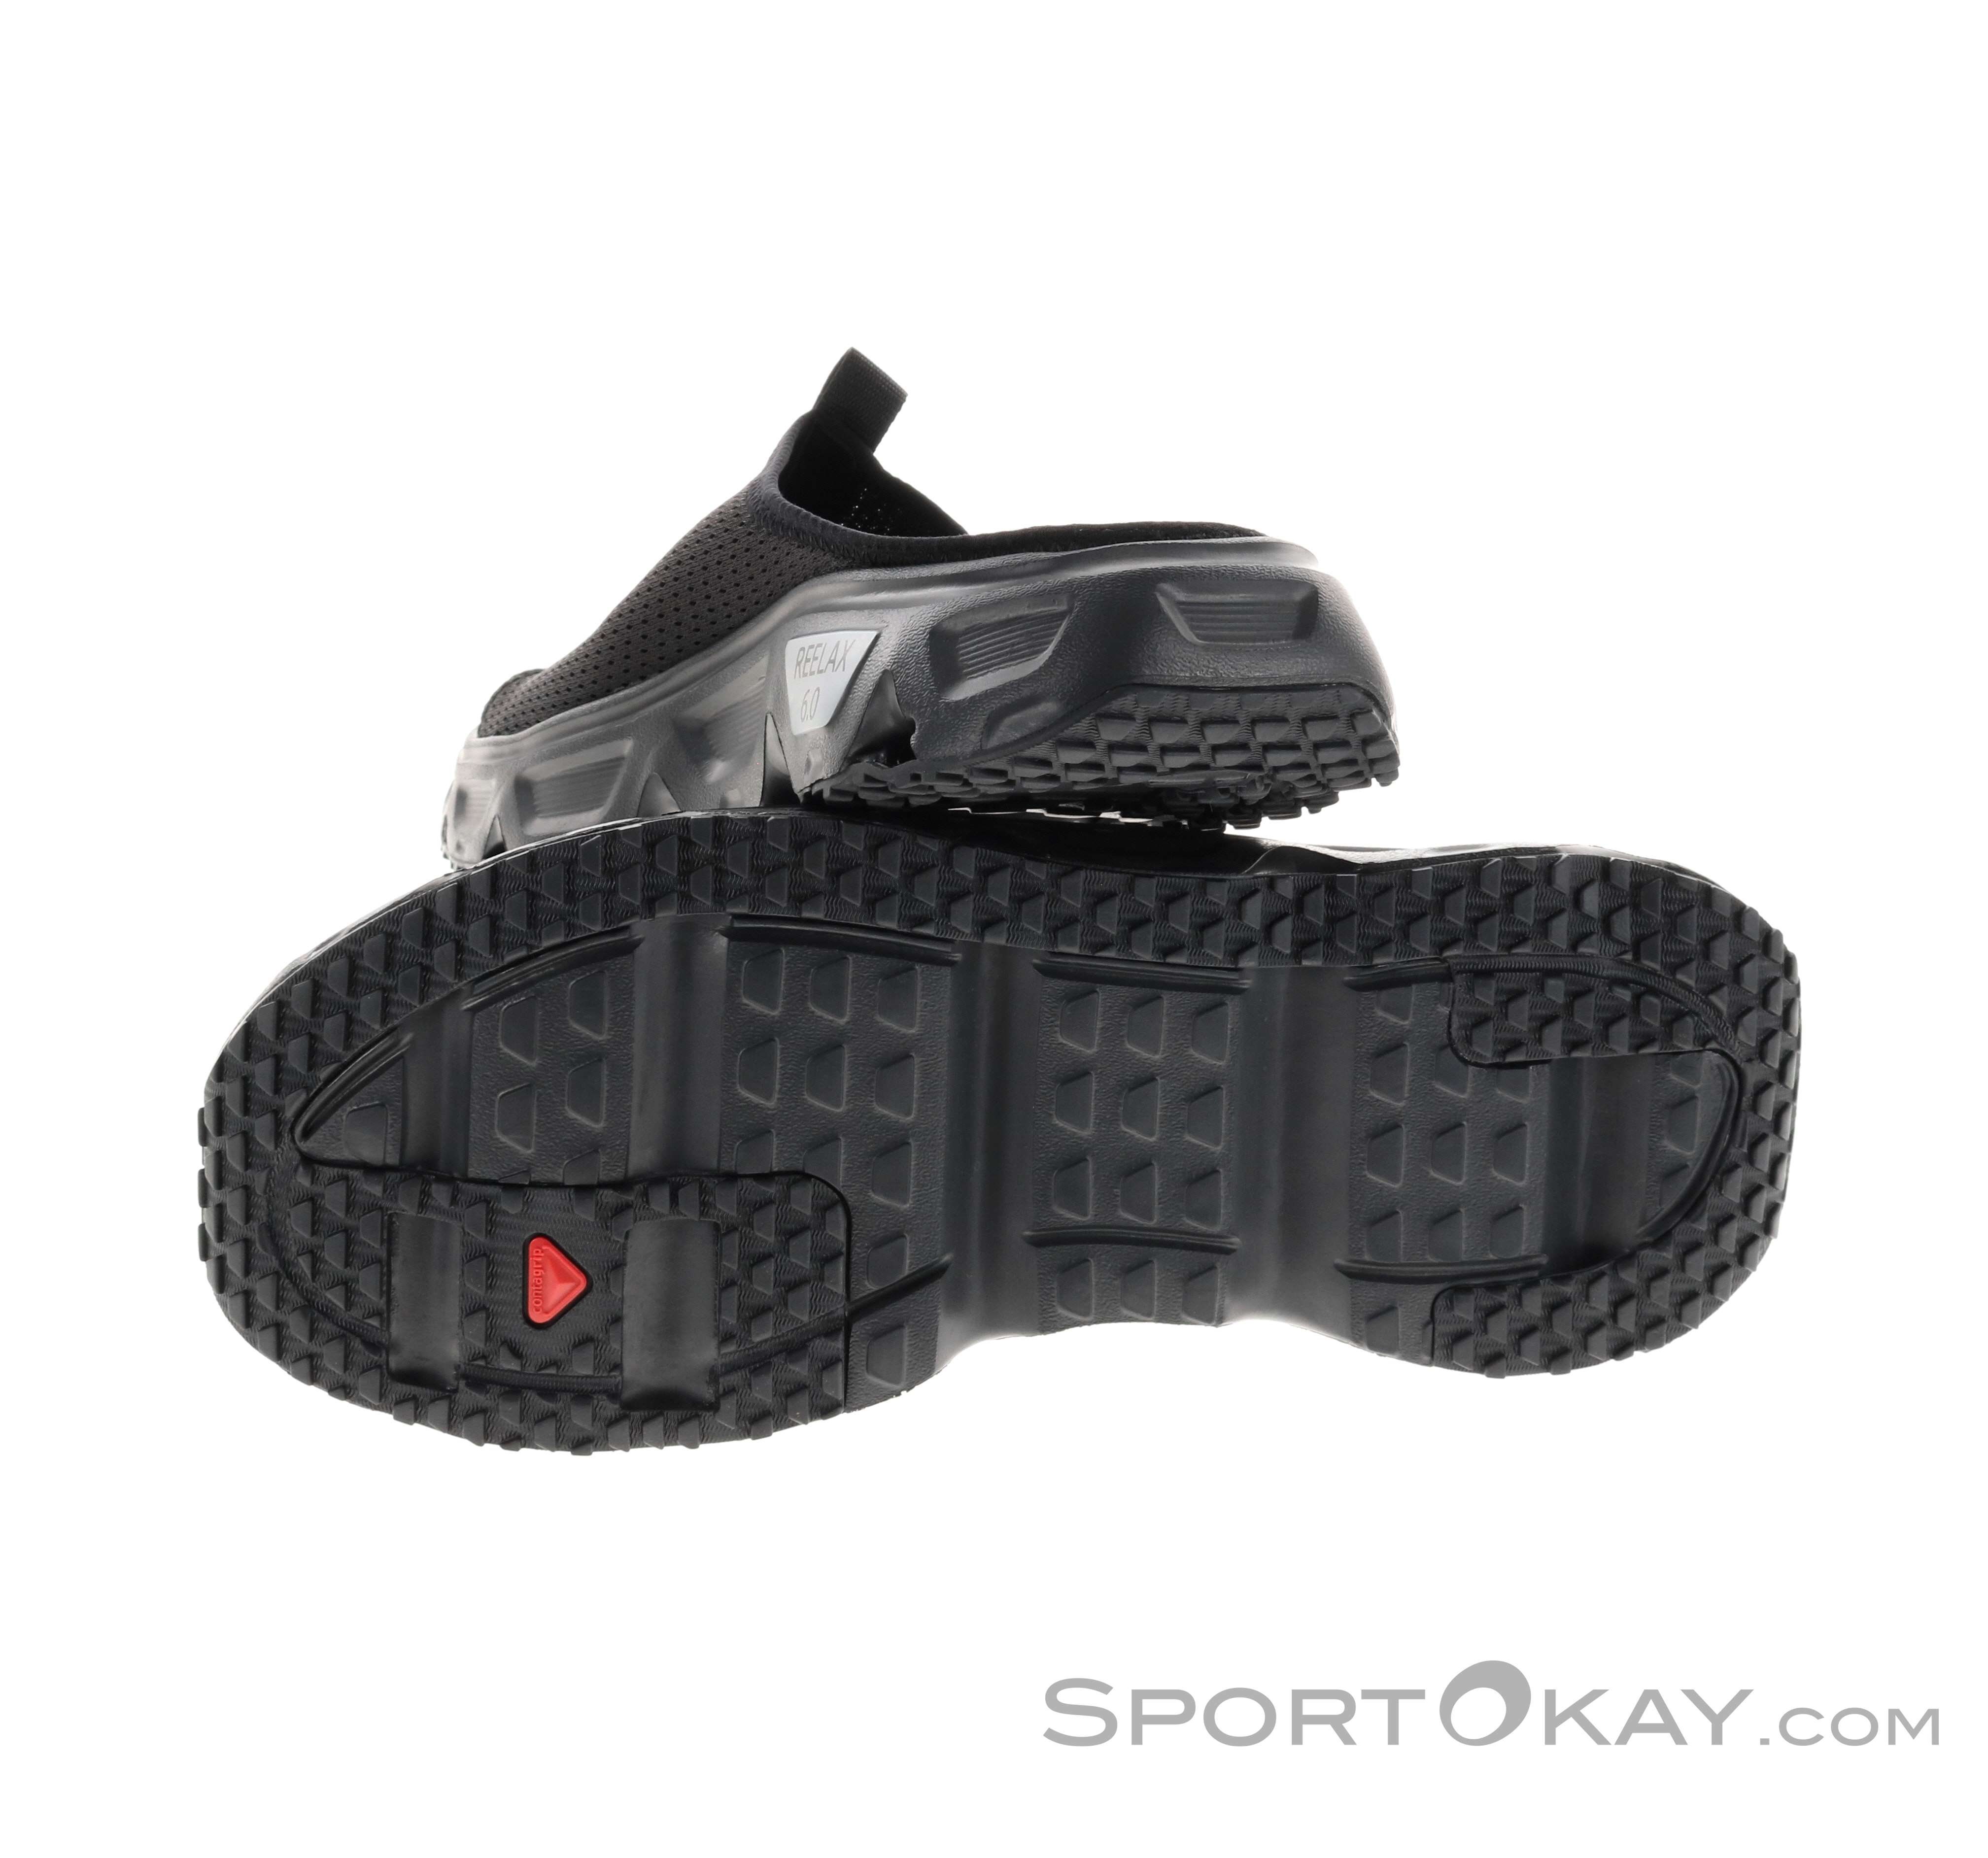 Salomon Reelax Slide 6.0 Mens Sandals - Leisure Shoes - Shoes & Poles -  Outdoor - All